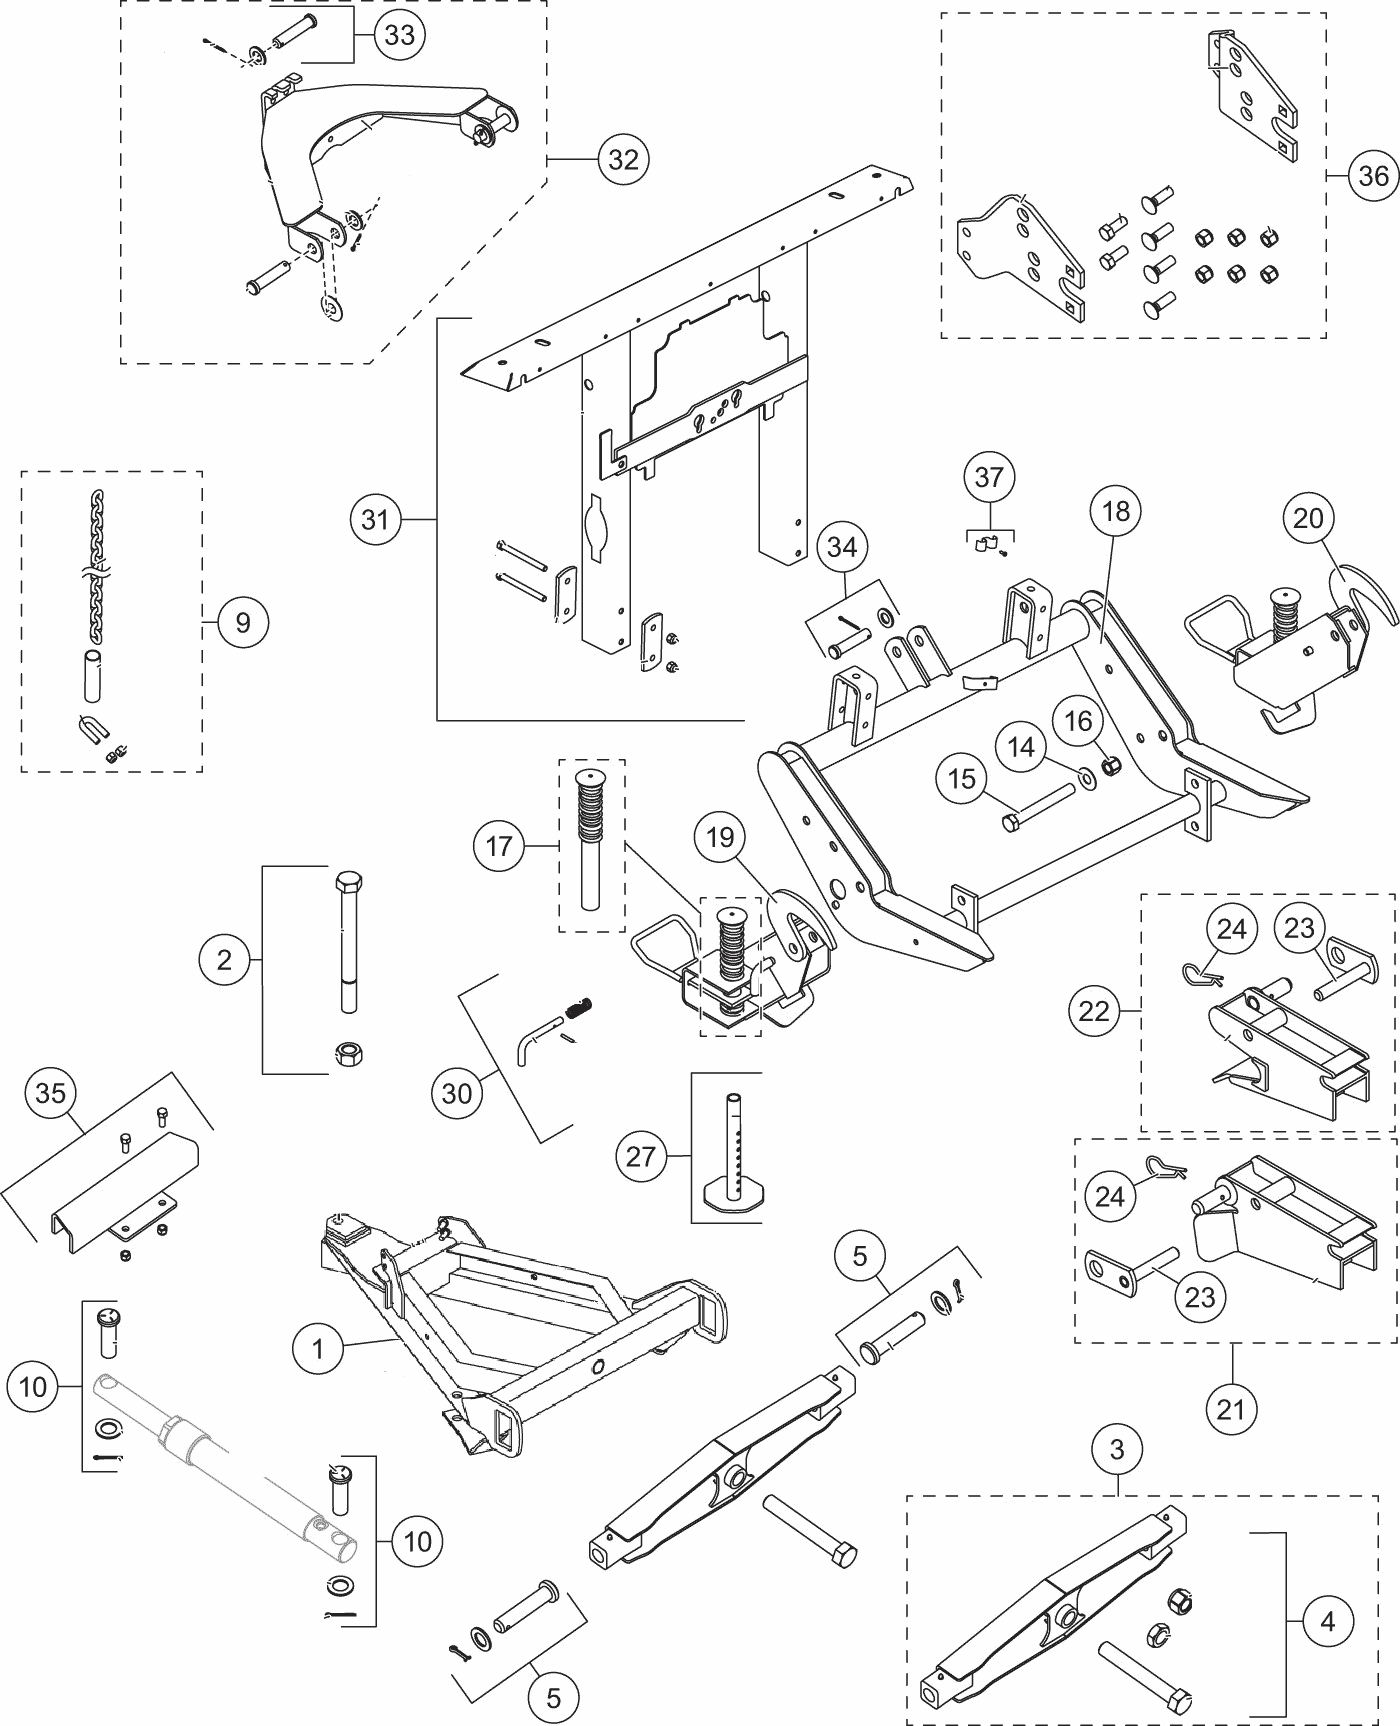 39-western-ultramount-plow-parts-diagram-majellaavinash